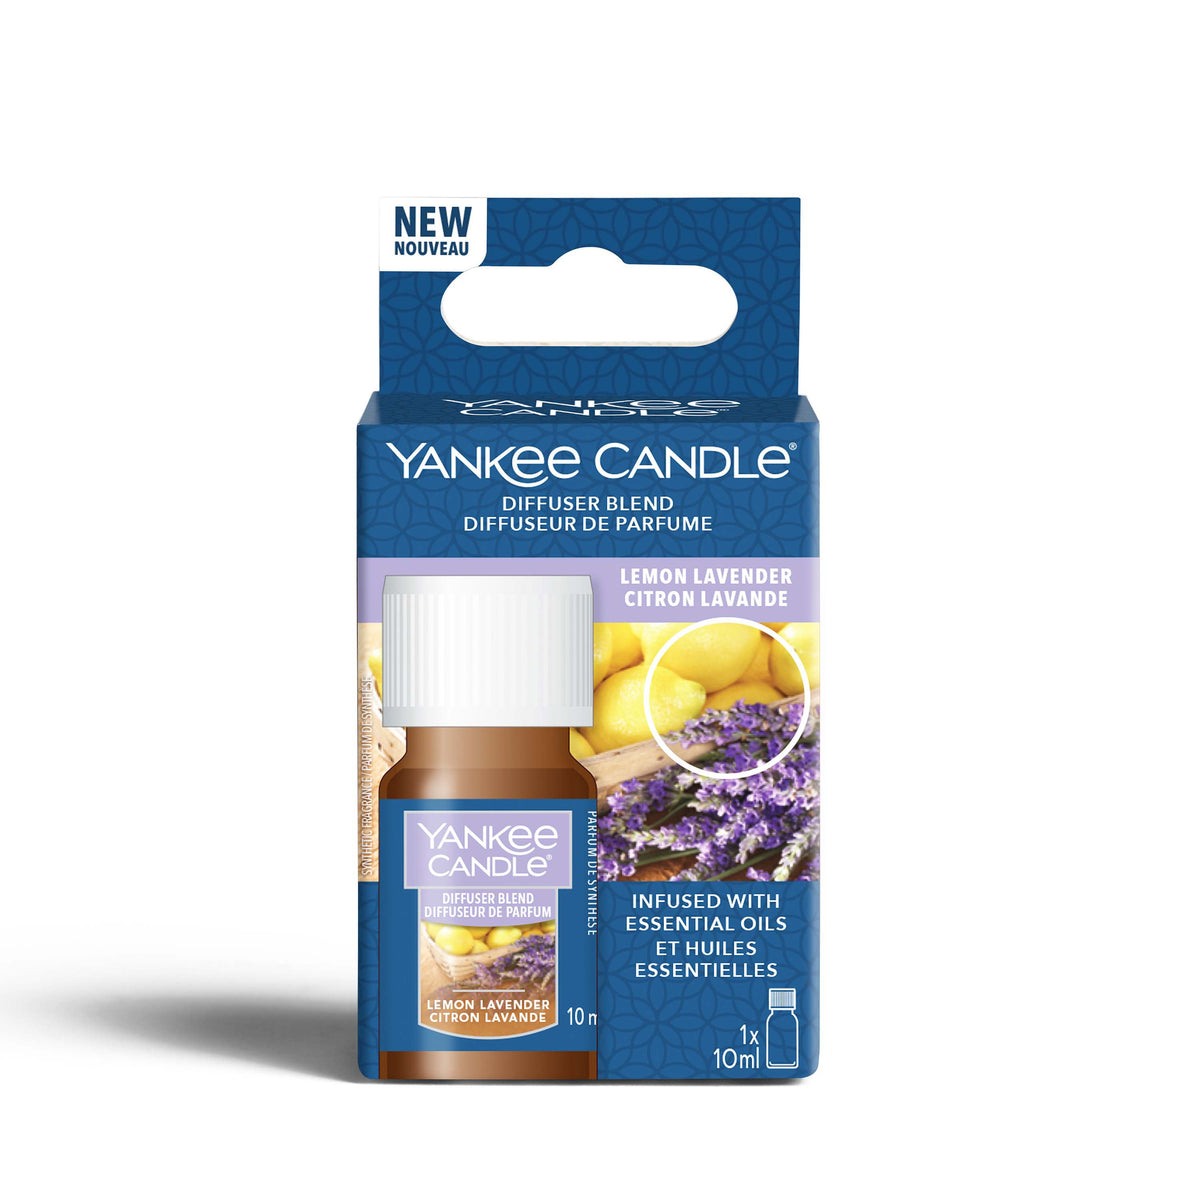 Yankee Candle Diffuser Blend Lemon Lavender 10ml